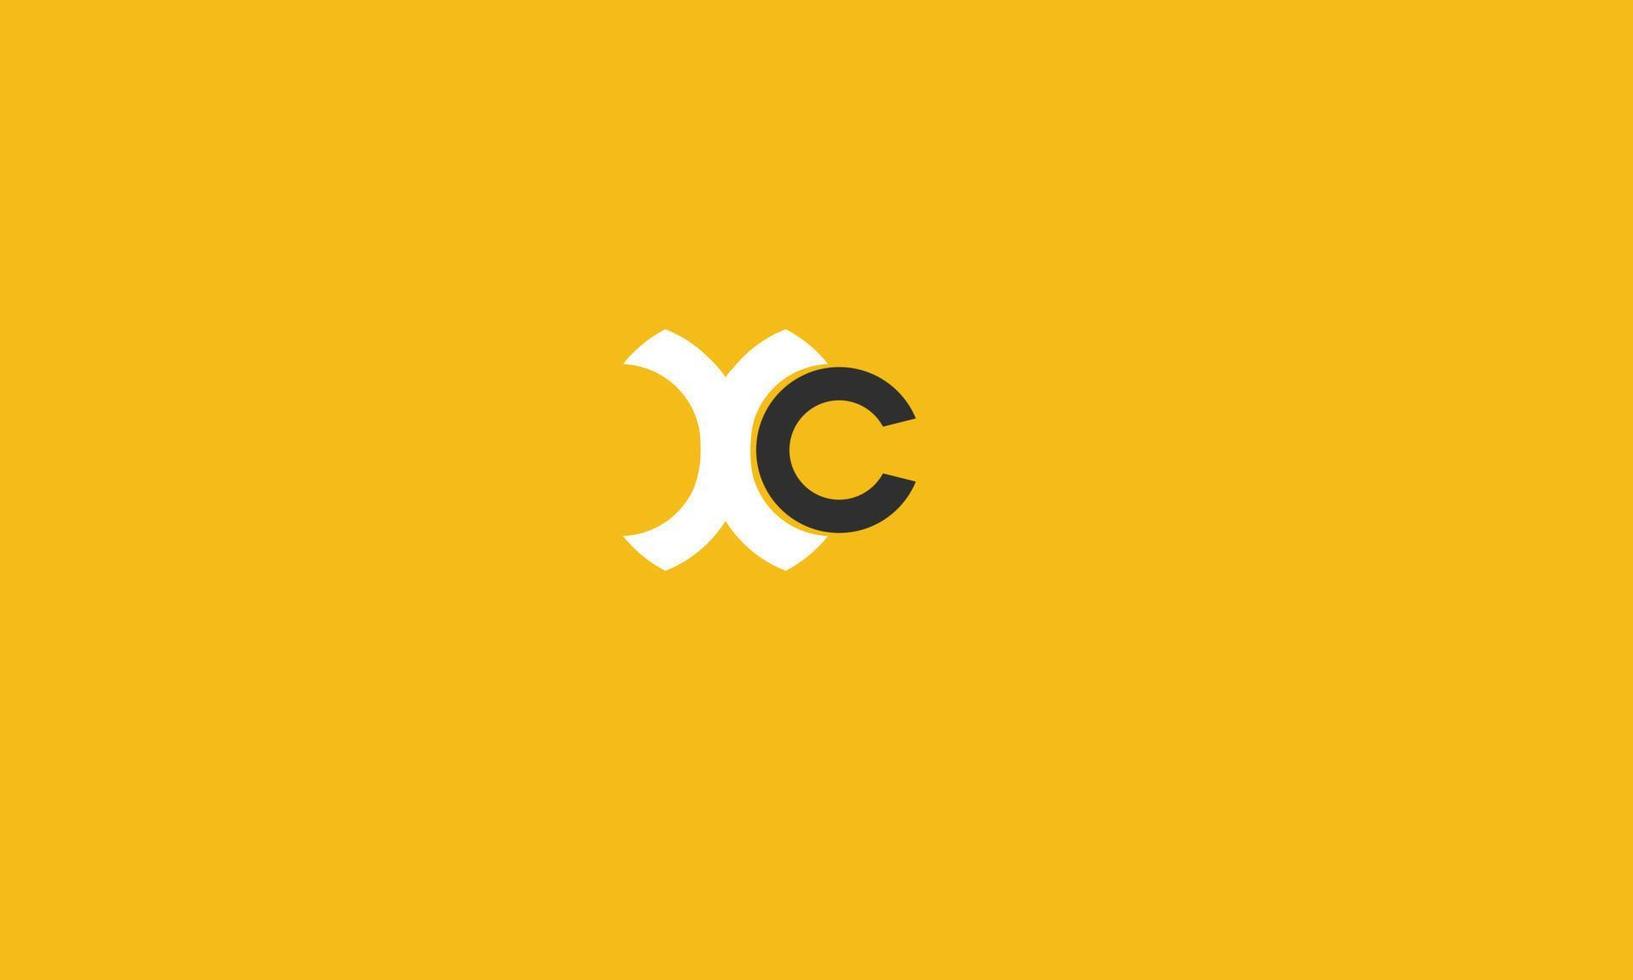 XC Alphabet letters Initials Monogram logo vector